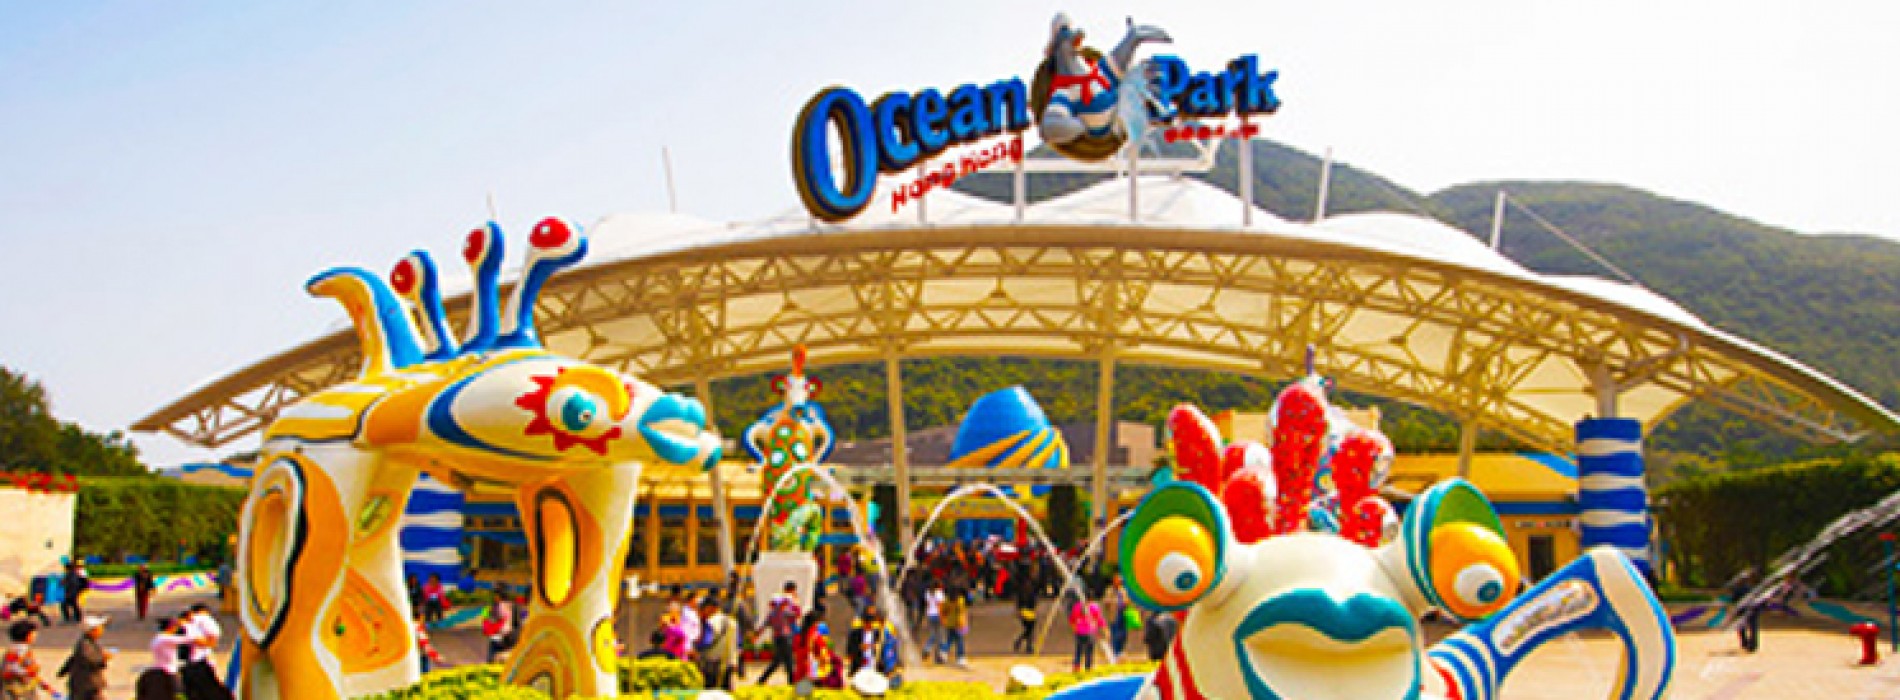 Ocean Park Summer Splash 2015 from July 1 to August 30 in Hong Kong